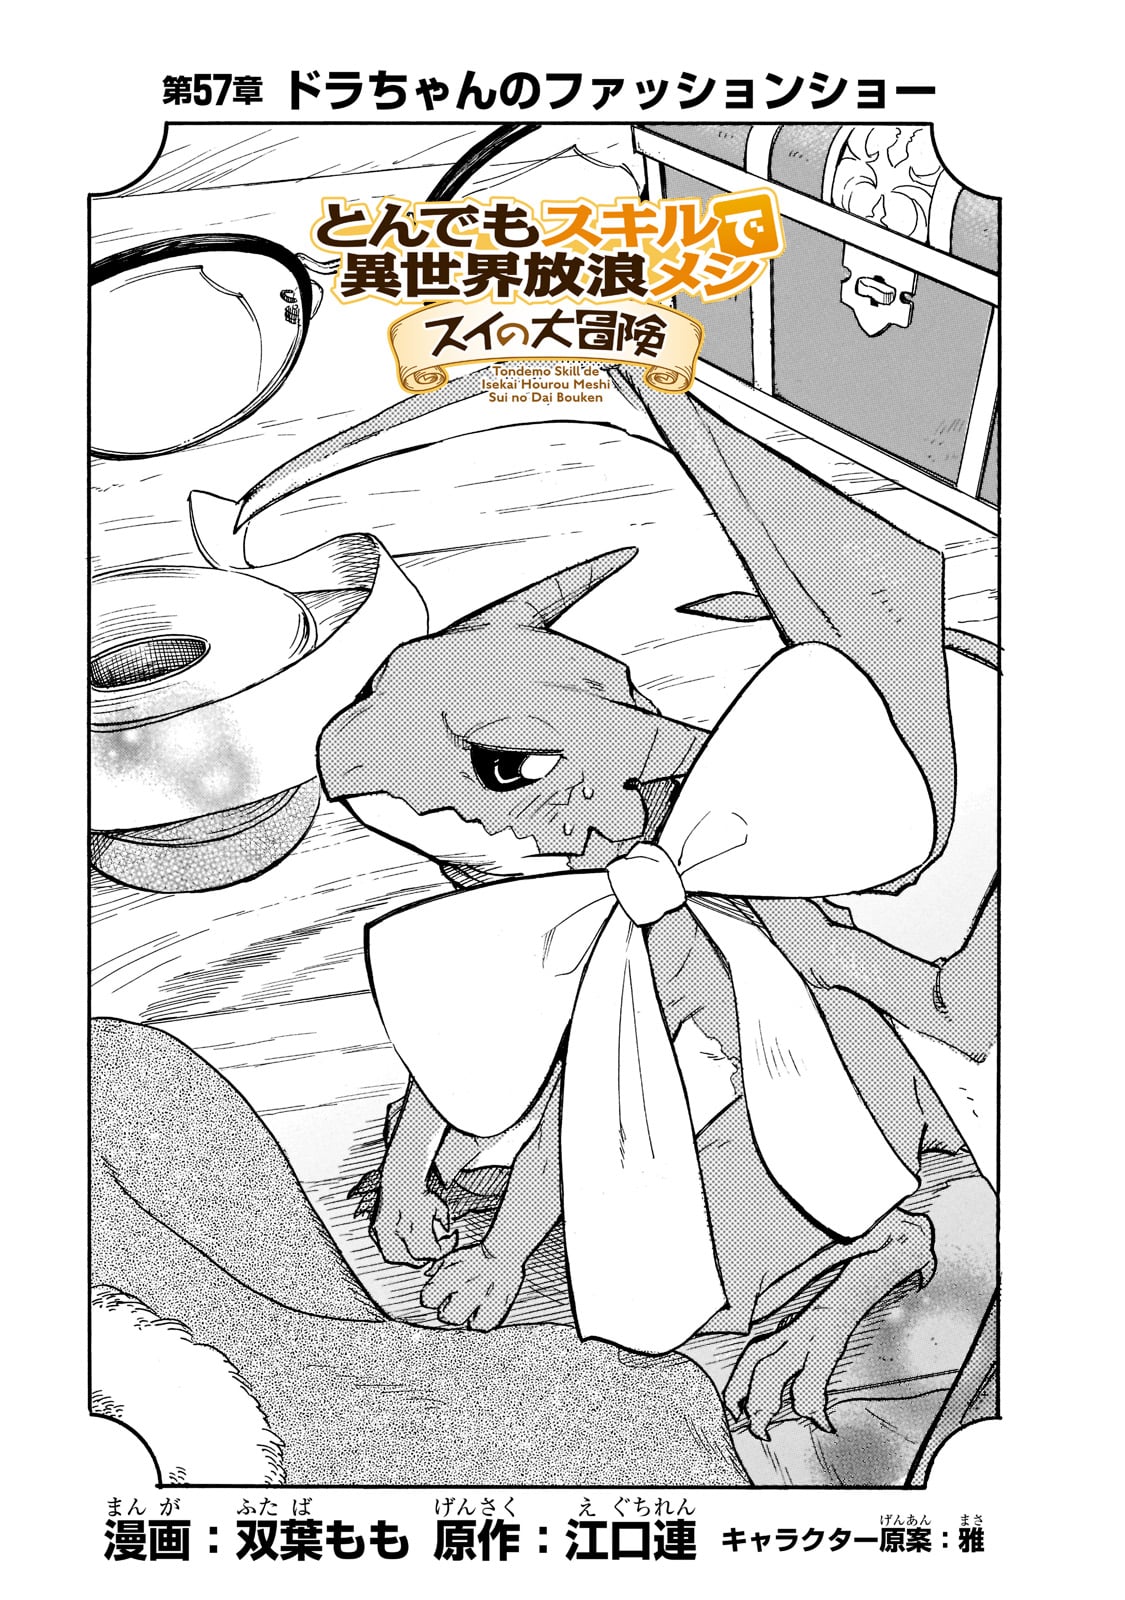 Read Manga Tondemo Skill de Isekai Hourou Meshi: Sui no Daibouken - Chapter  36